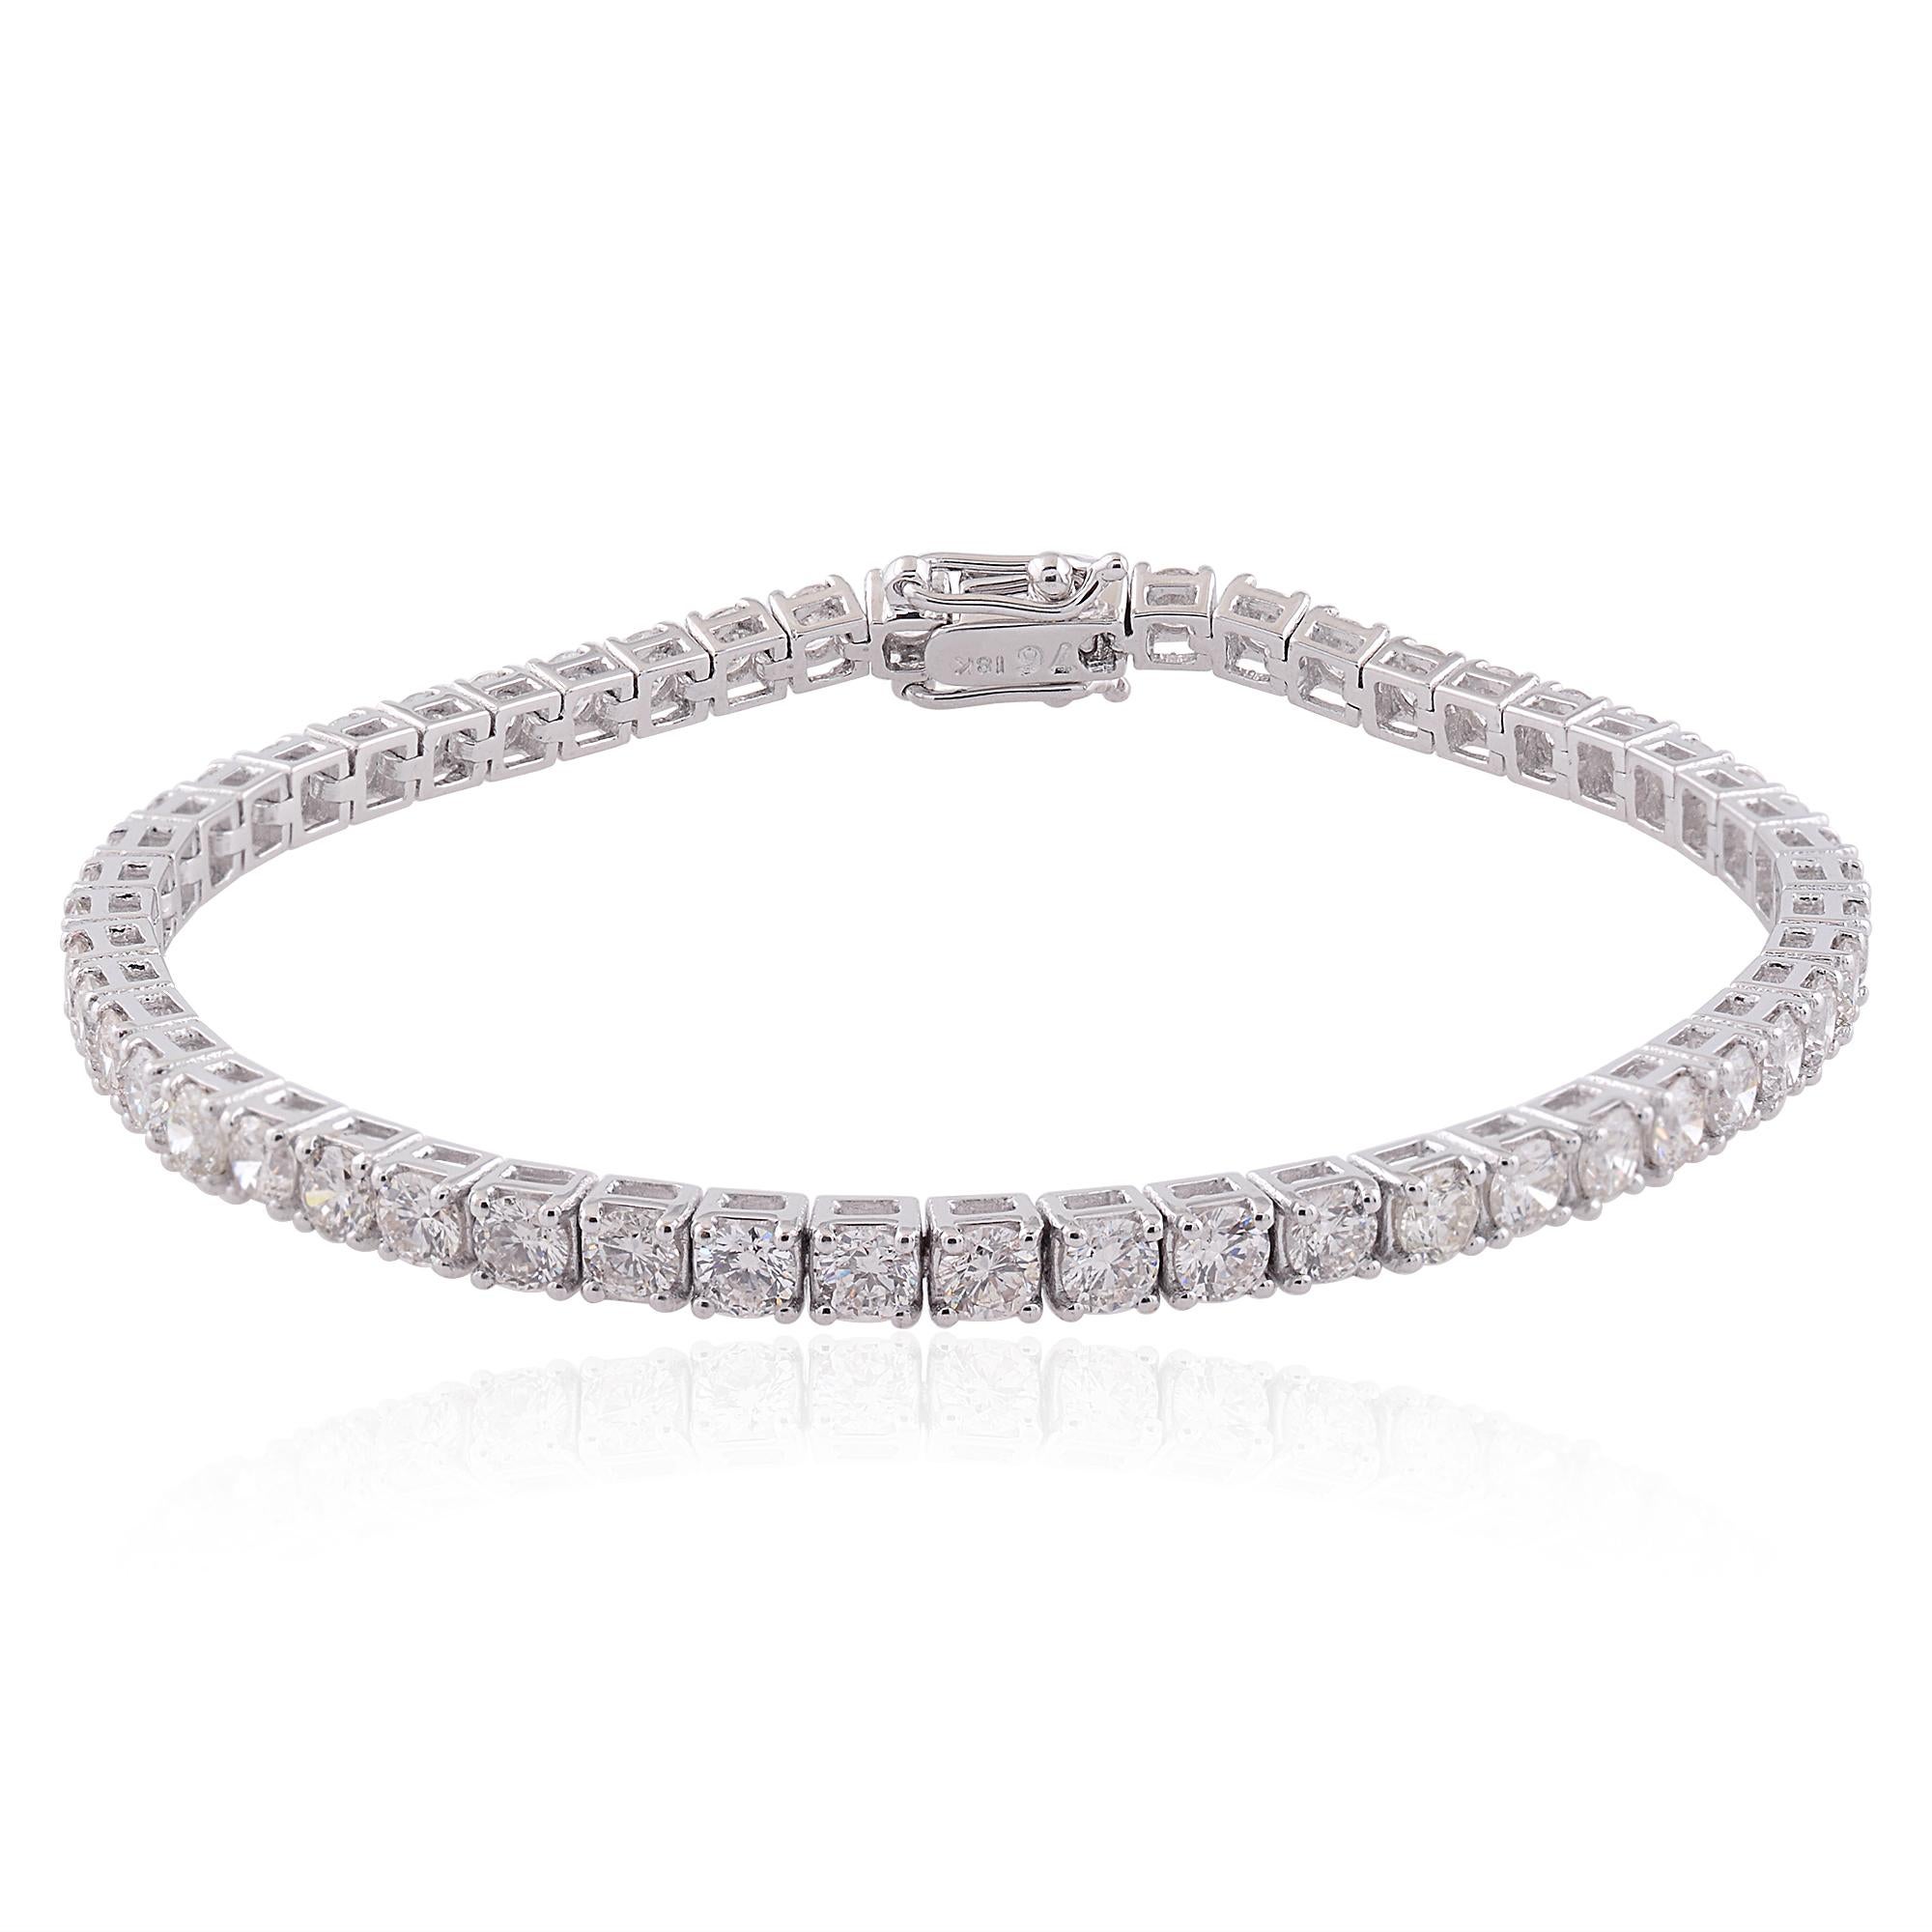 Round Cut 5.75 Carat SI Clarity HI Color Diamond Tennis Bracelet 18Kt White Gold Jewelry For Sale